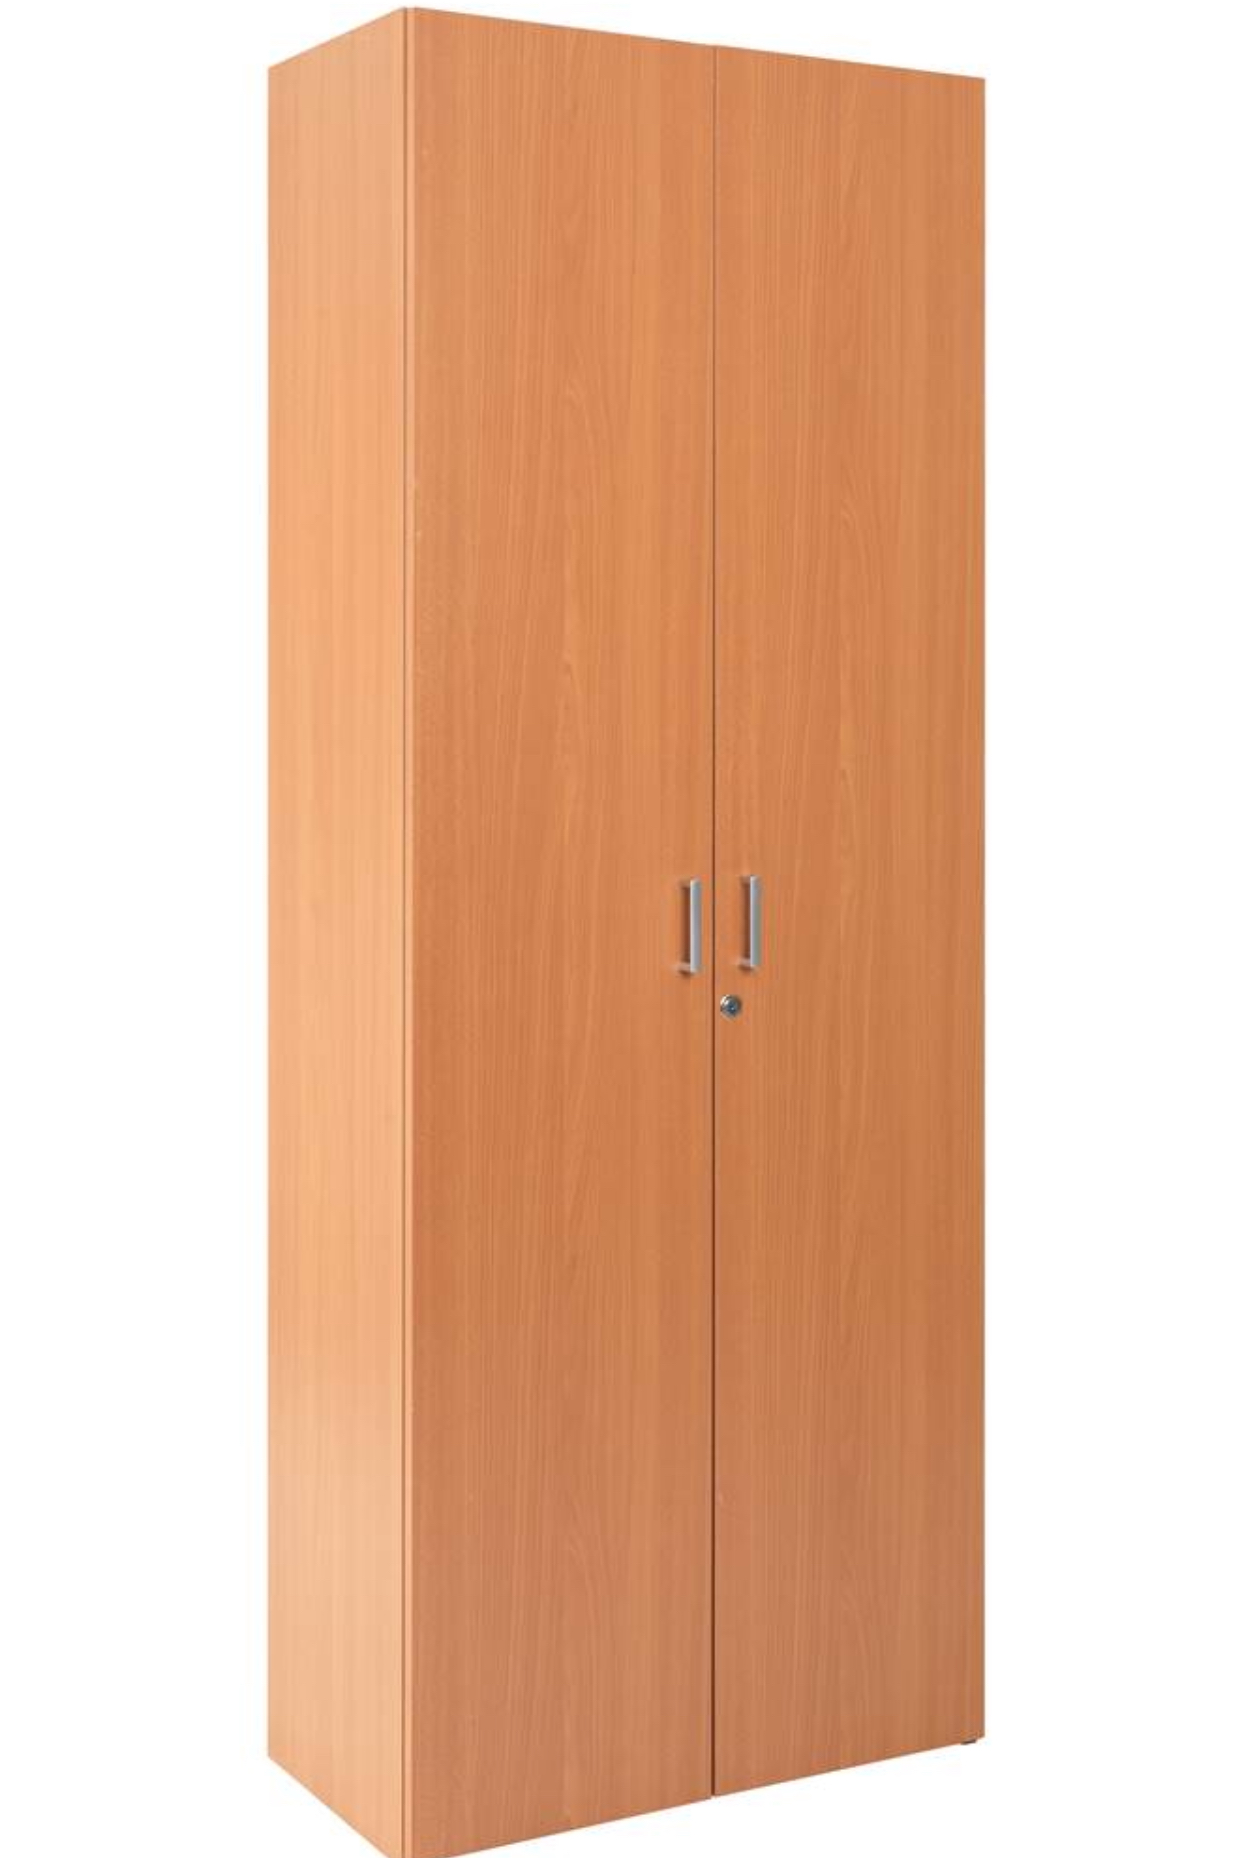 Budget Beech Double Door Cupboard 4 shelf 2030 h x 760 w x 390 d